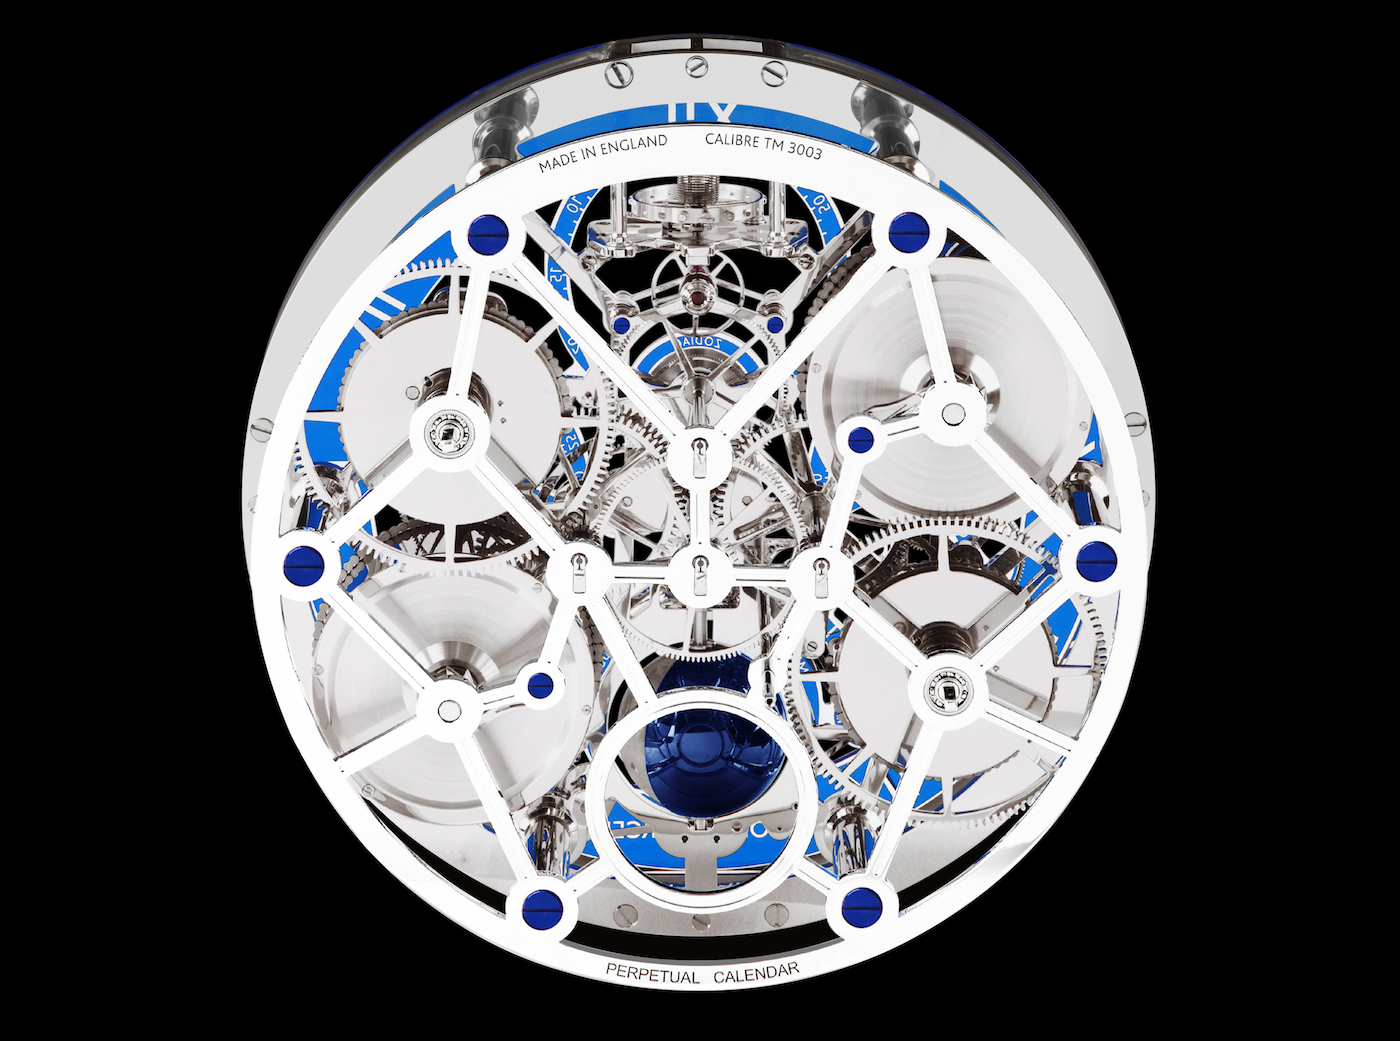 Winch Design And Thomas Mercer Reveal The Nautilus Marine Chronometer